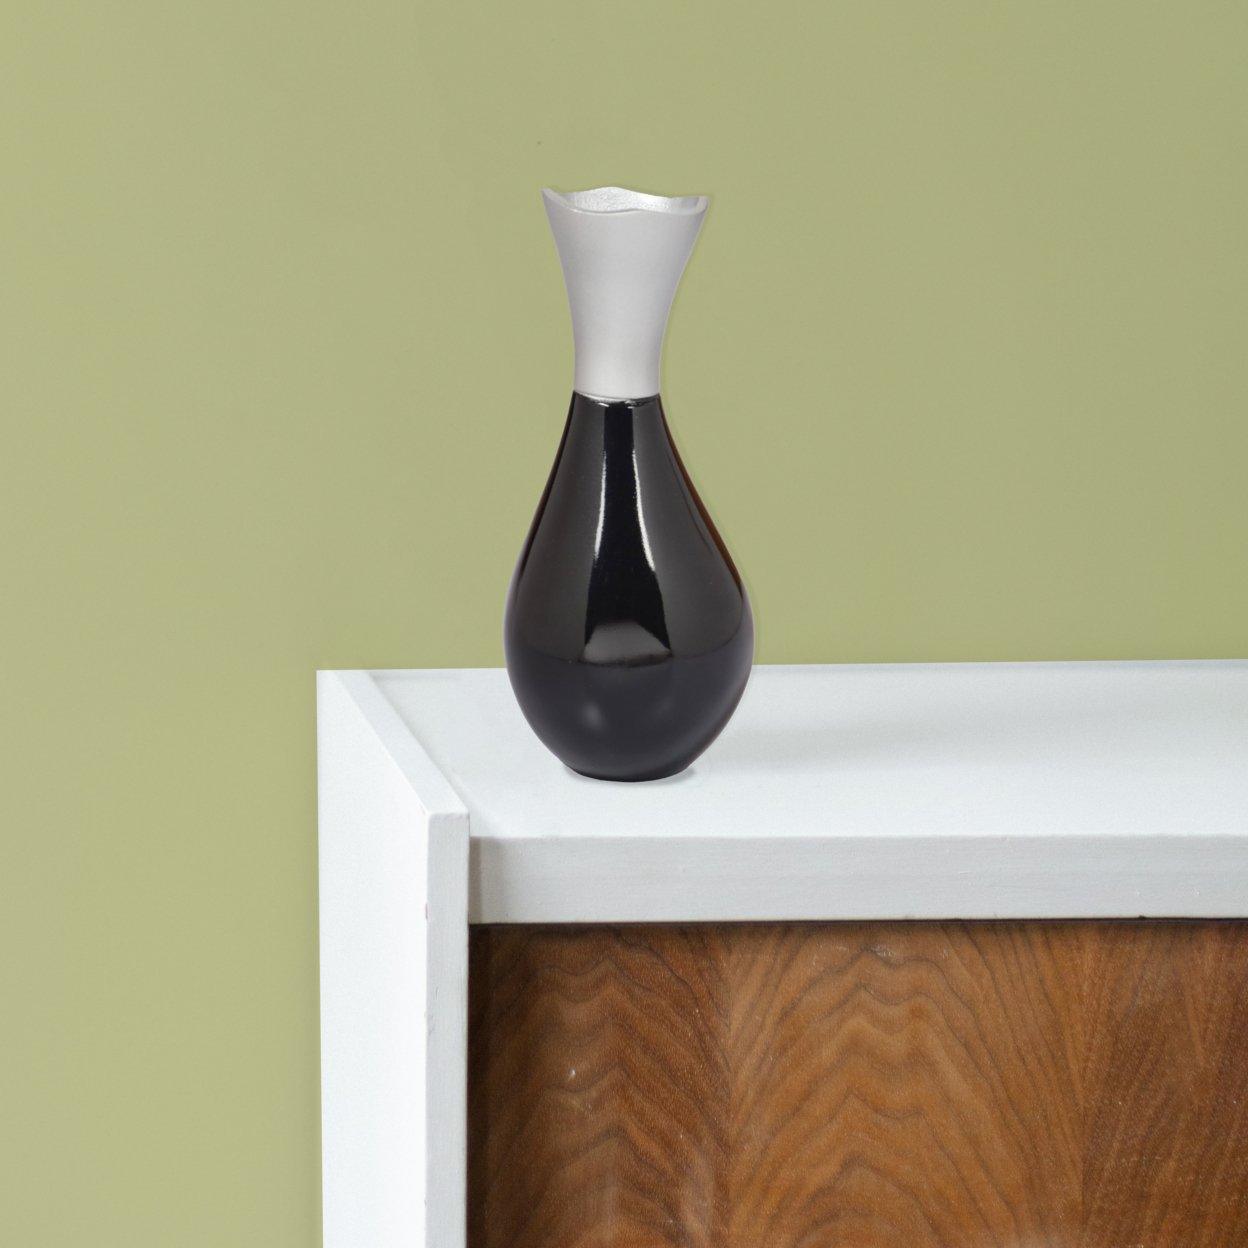 Aluminium-Casted Modern Decorative Flower Table Vase - Small